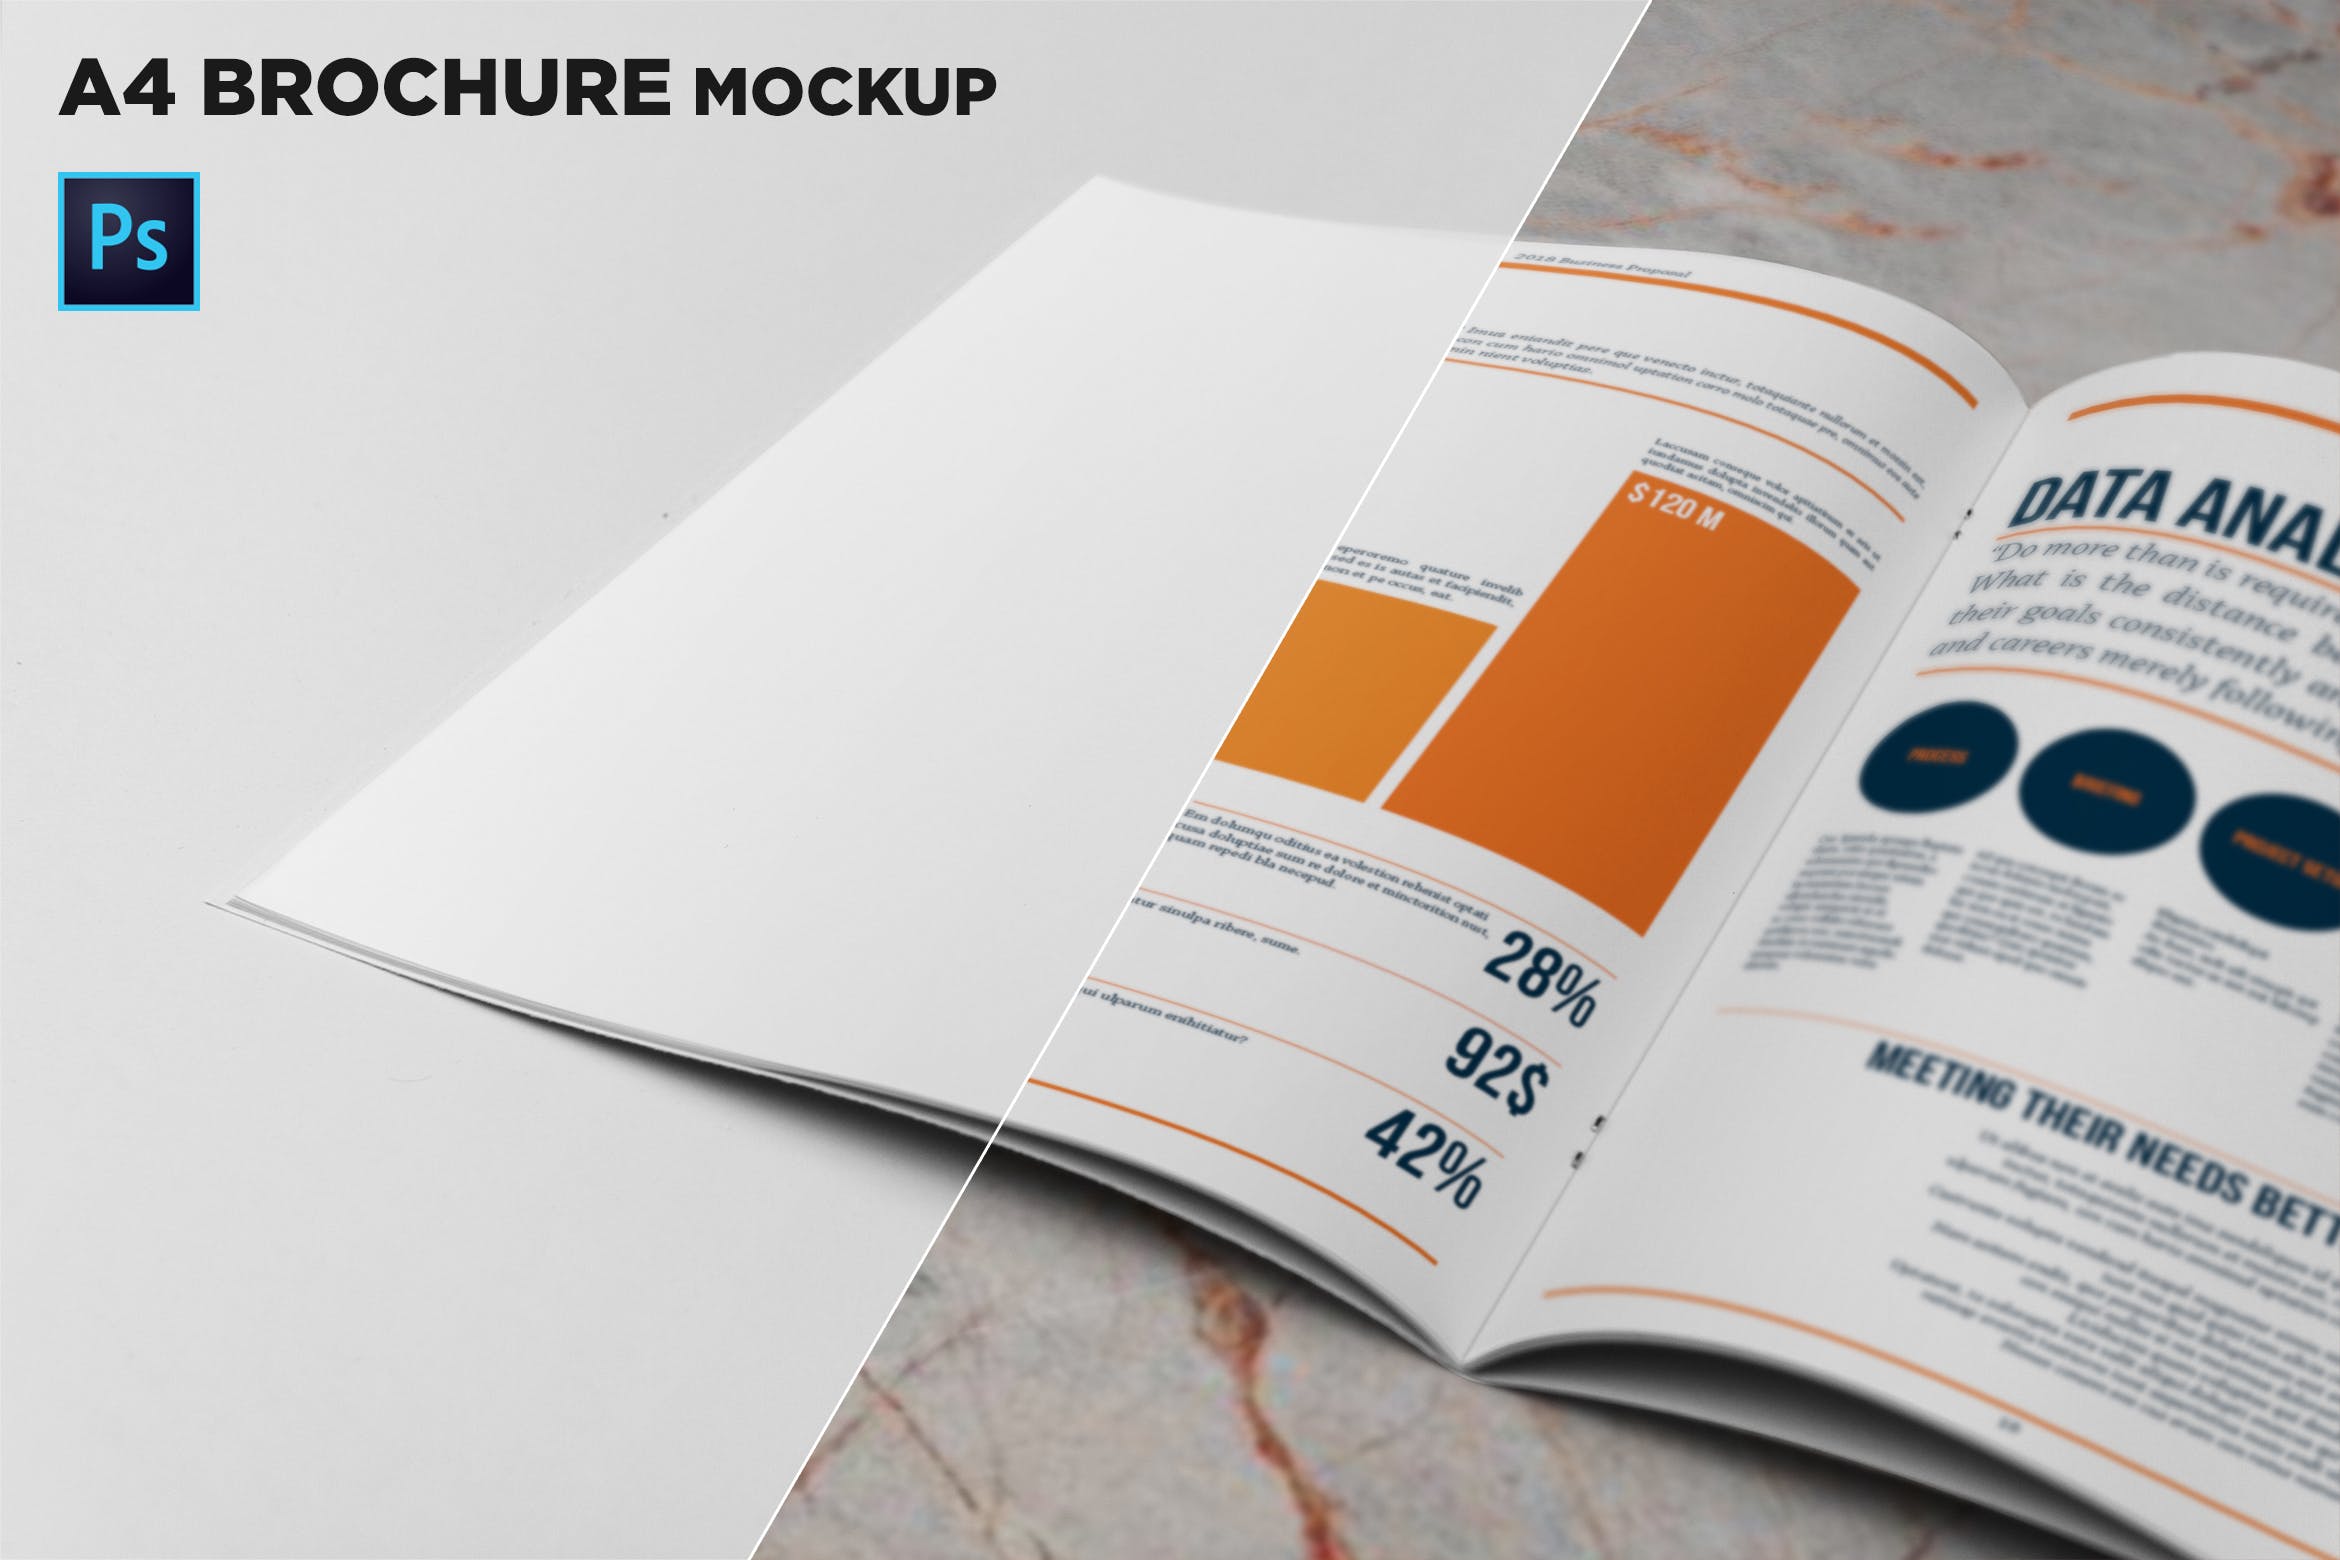 A4尺寸企业/品牌宣传册特写样机蚂蚁素材精选模板 A4 Brochure Closeup Mockup插图